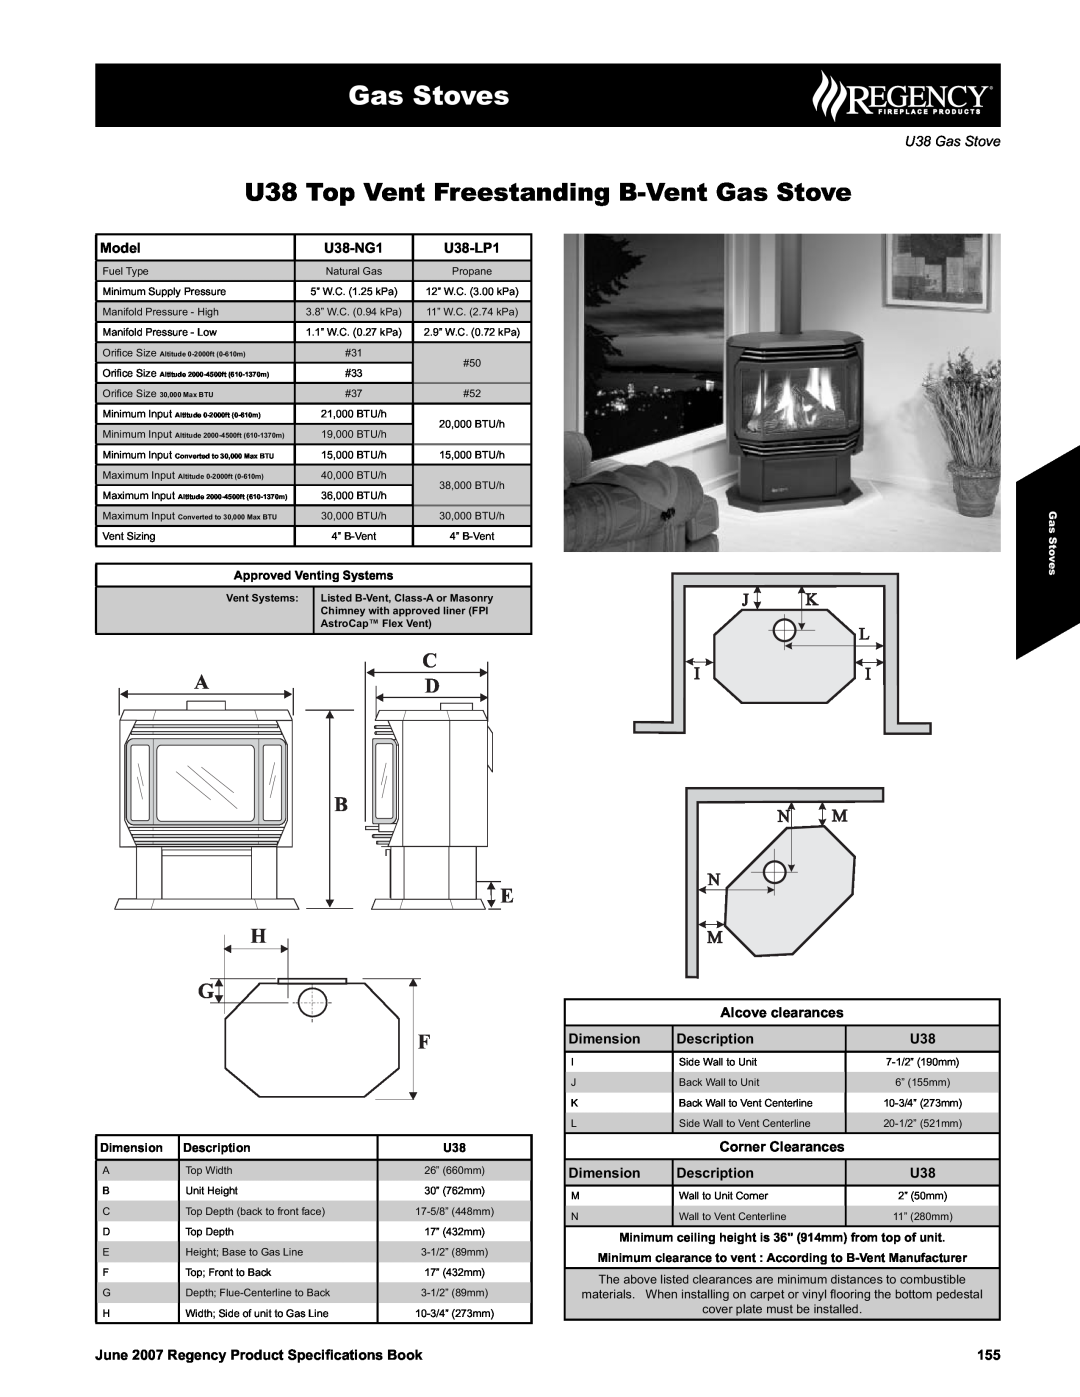 Regency U38-LP1 specifications Gas Stoves, U38 Gas Stove, Model, U38-NG1, Dimension, Alcove clearances, Description 